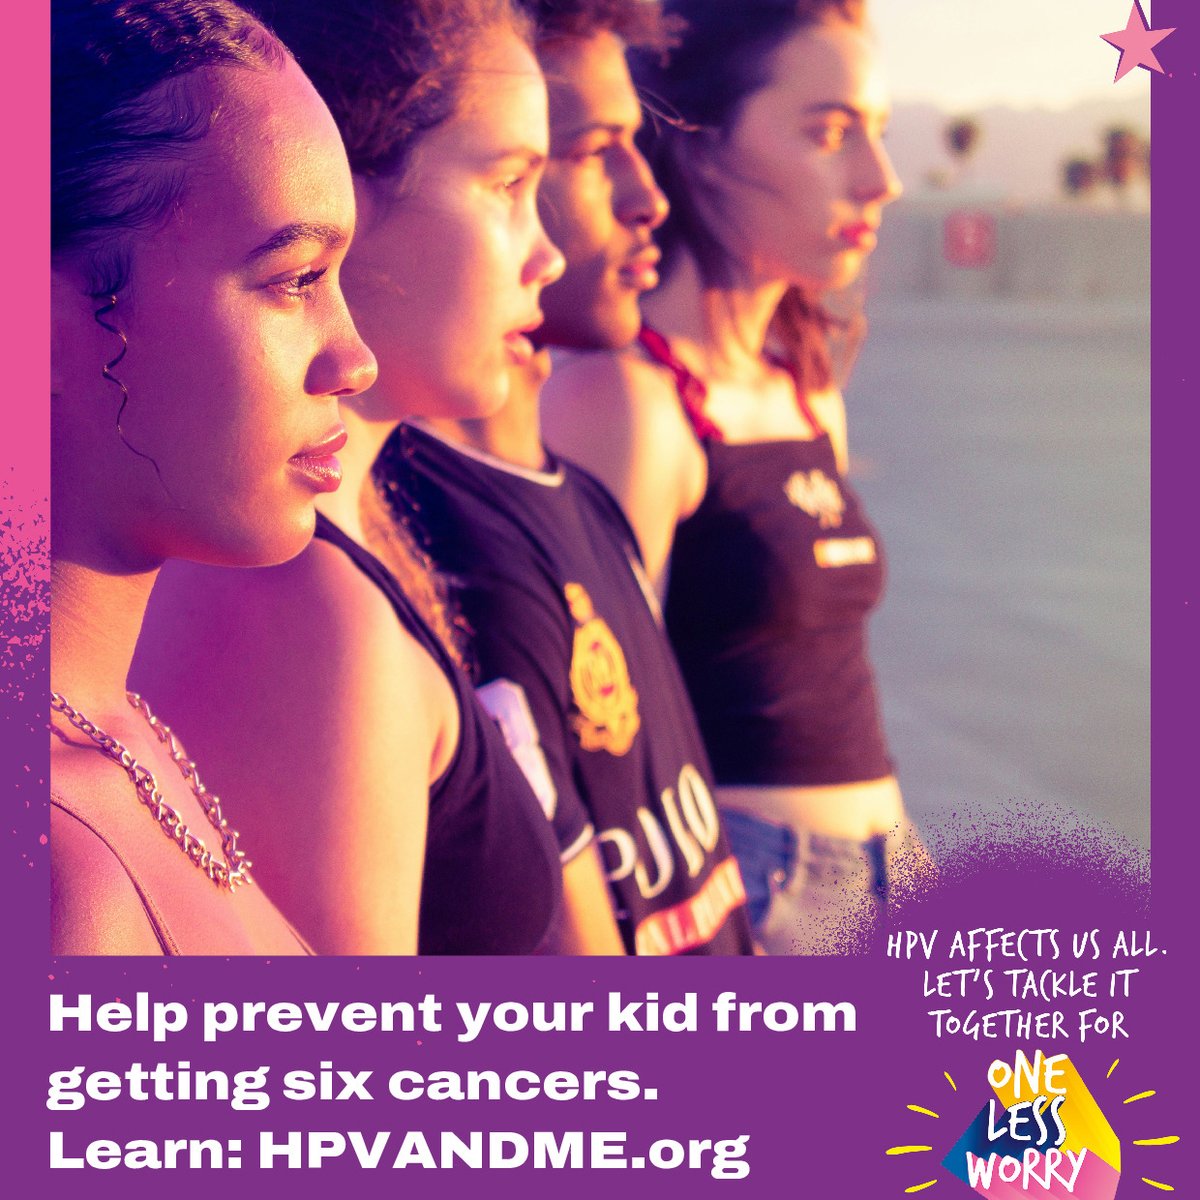 Today is Int'l HPV Awareness Day! Visit hpvandme.org #HPV #cancerprevention #HPVvaccine #hpvawareness #AskAboutHPV #onelessworry #Endcancer #parents #parentsofinstagram #parentsoftiktok #adolescents #teen #publichealth #globalhealth #hpvandme